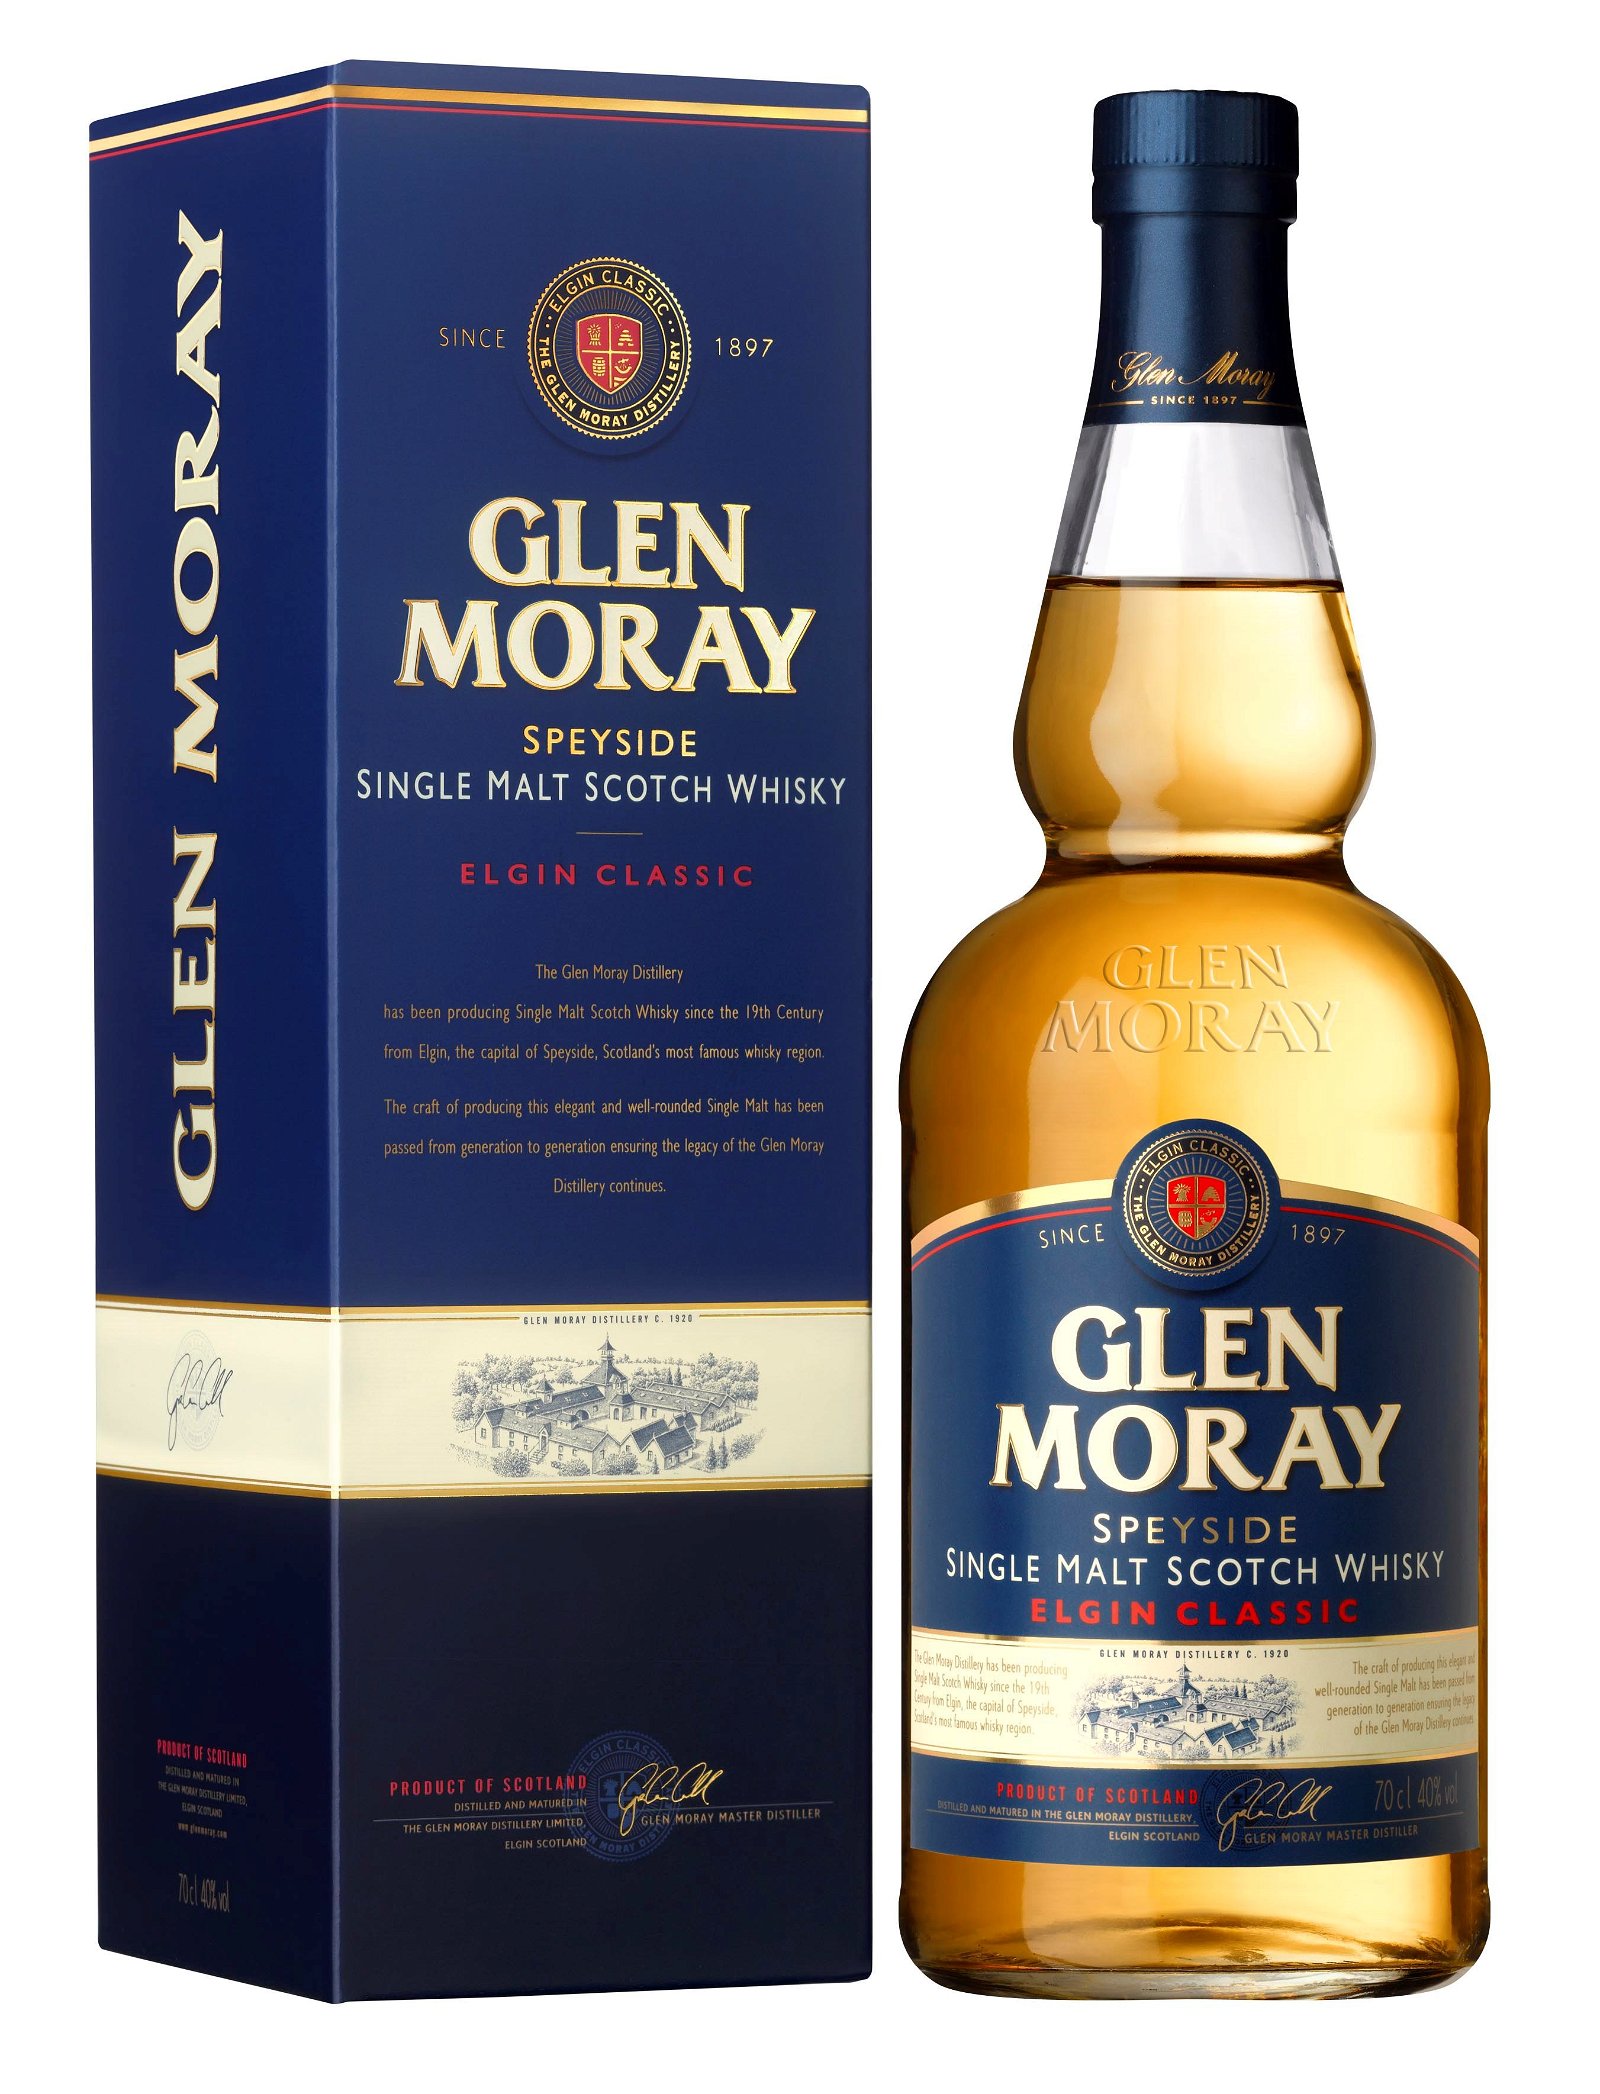 GLENMORAY Glen Moray "Elgin Classic" Speyside Single Malt